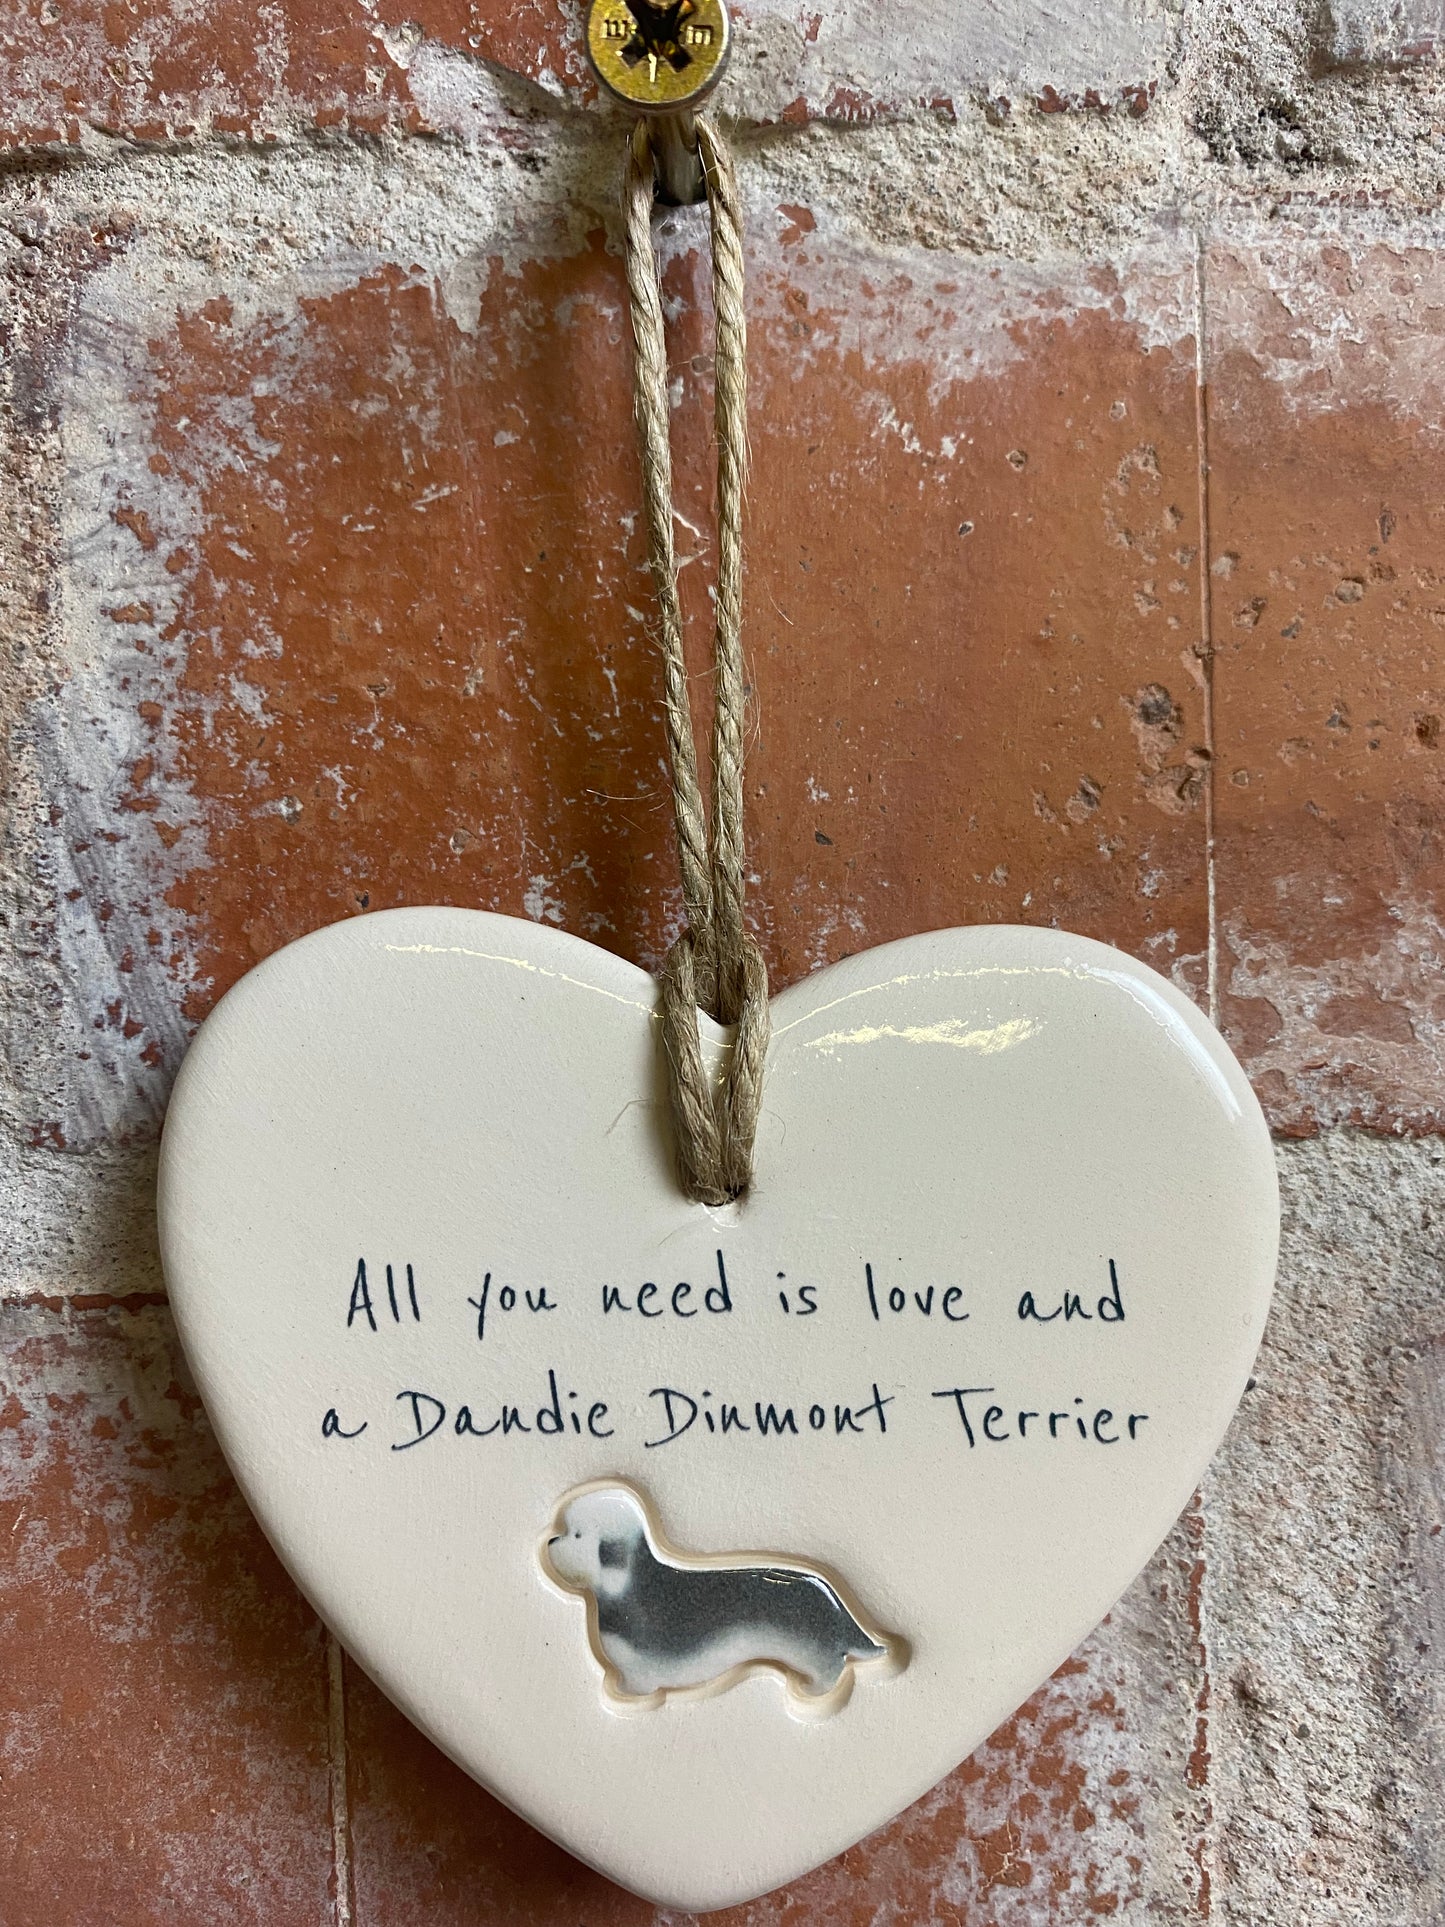 Dandie Dinmont Terrier heart